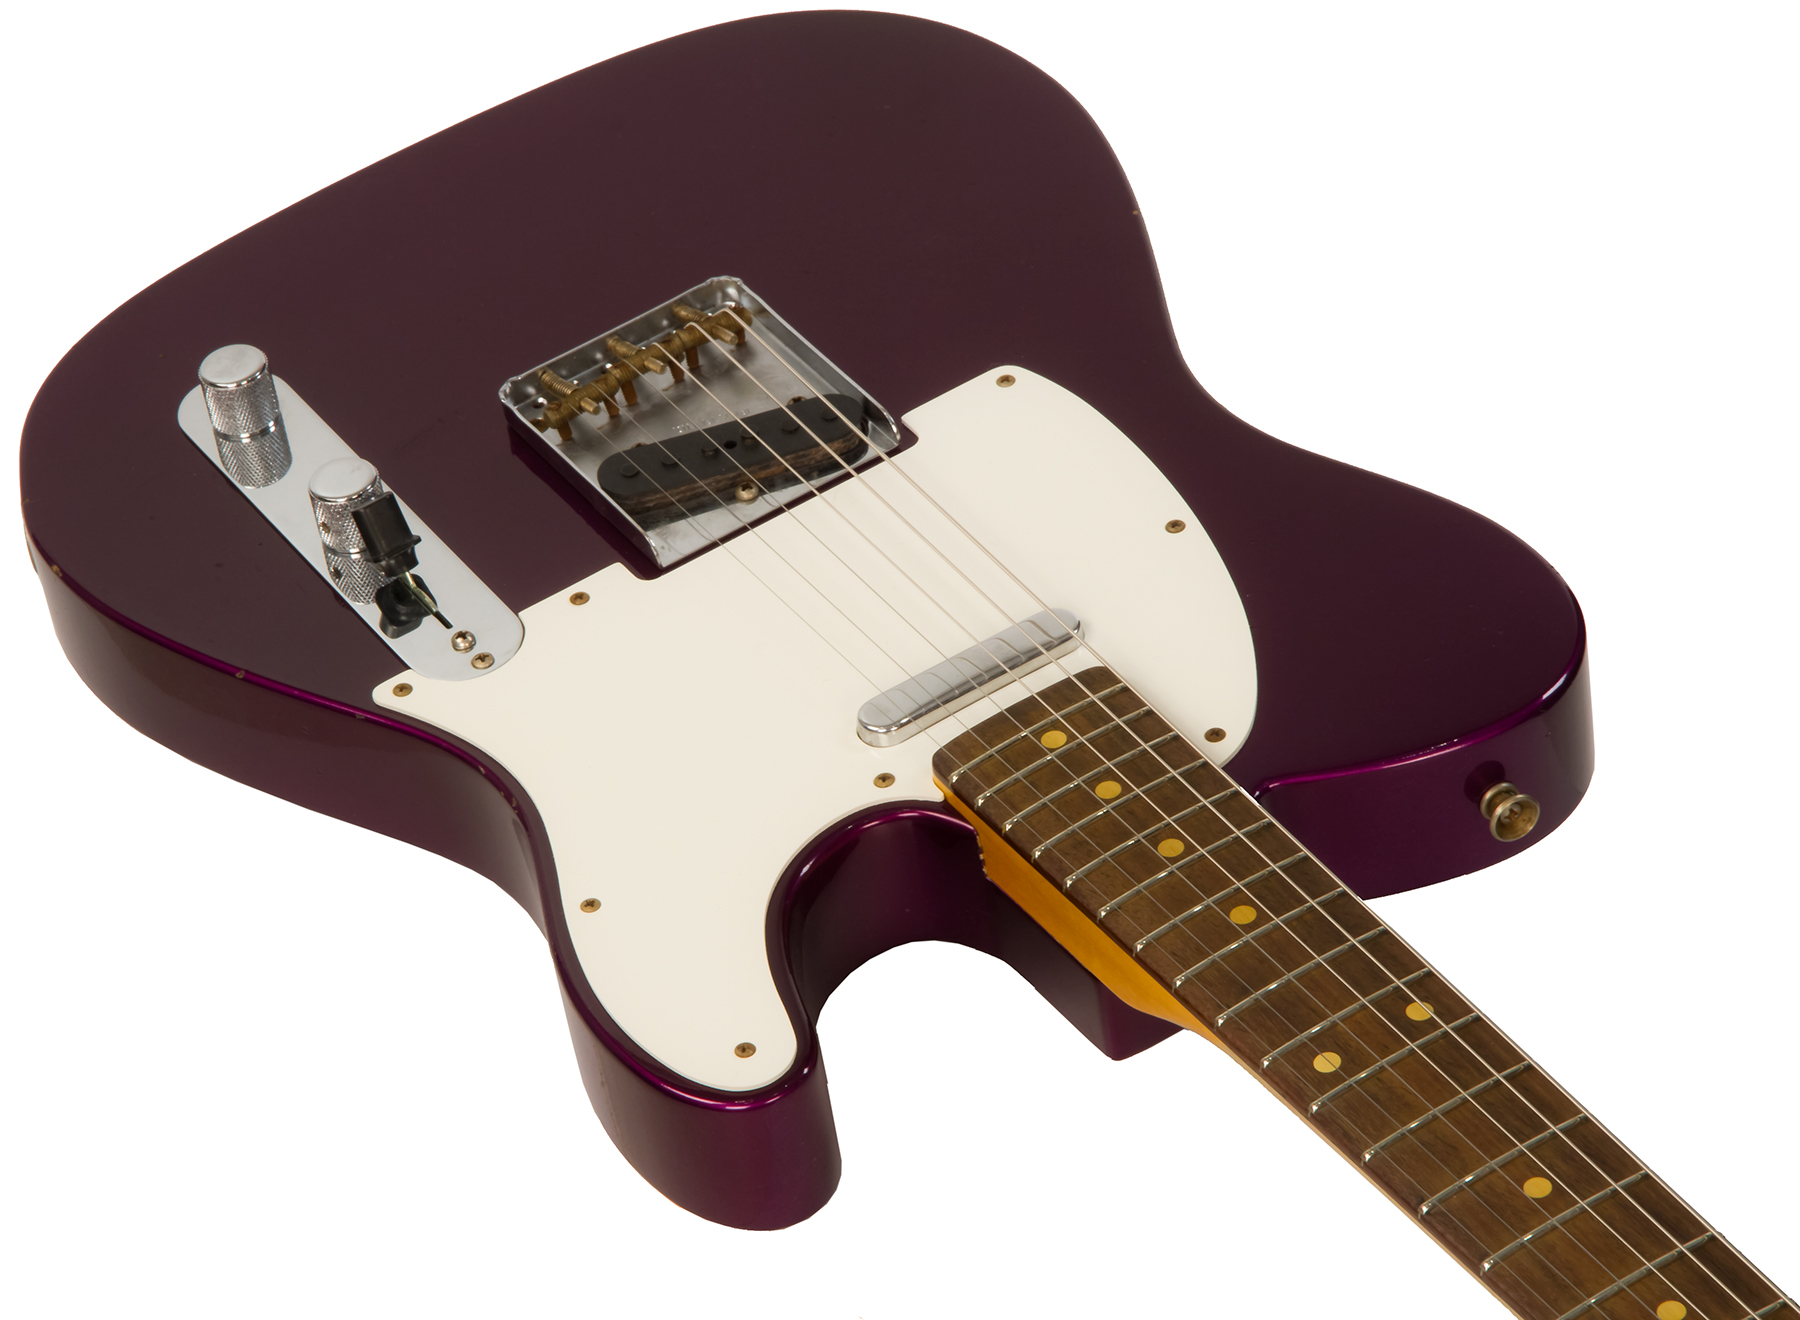 Fender Custom Shop Tele 1960 Rw #cz549121 - Journeyman Relic Purple Metallic - Televorm elektrische gitaar - Variation 2